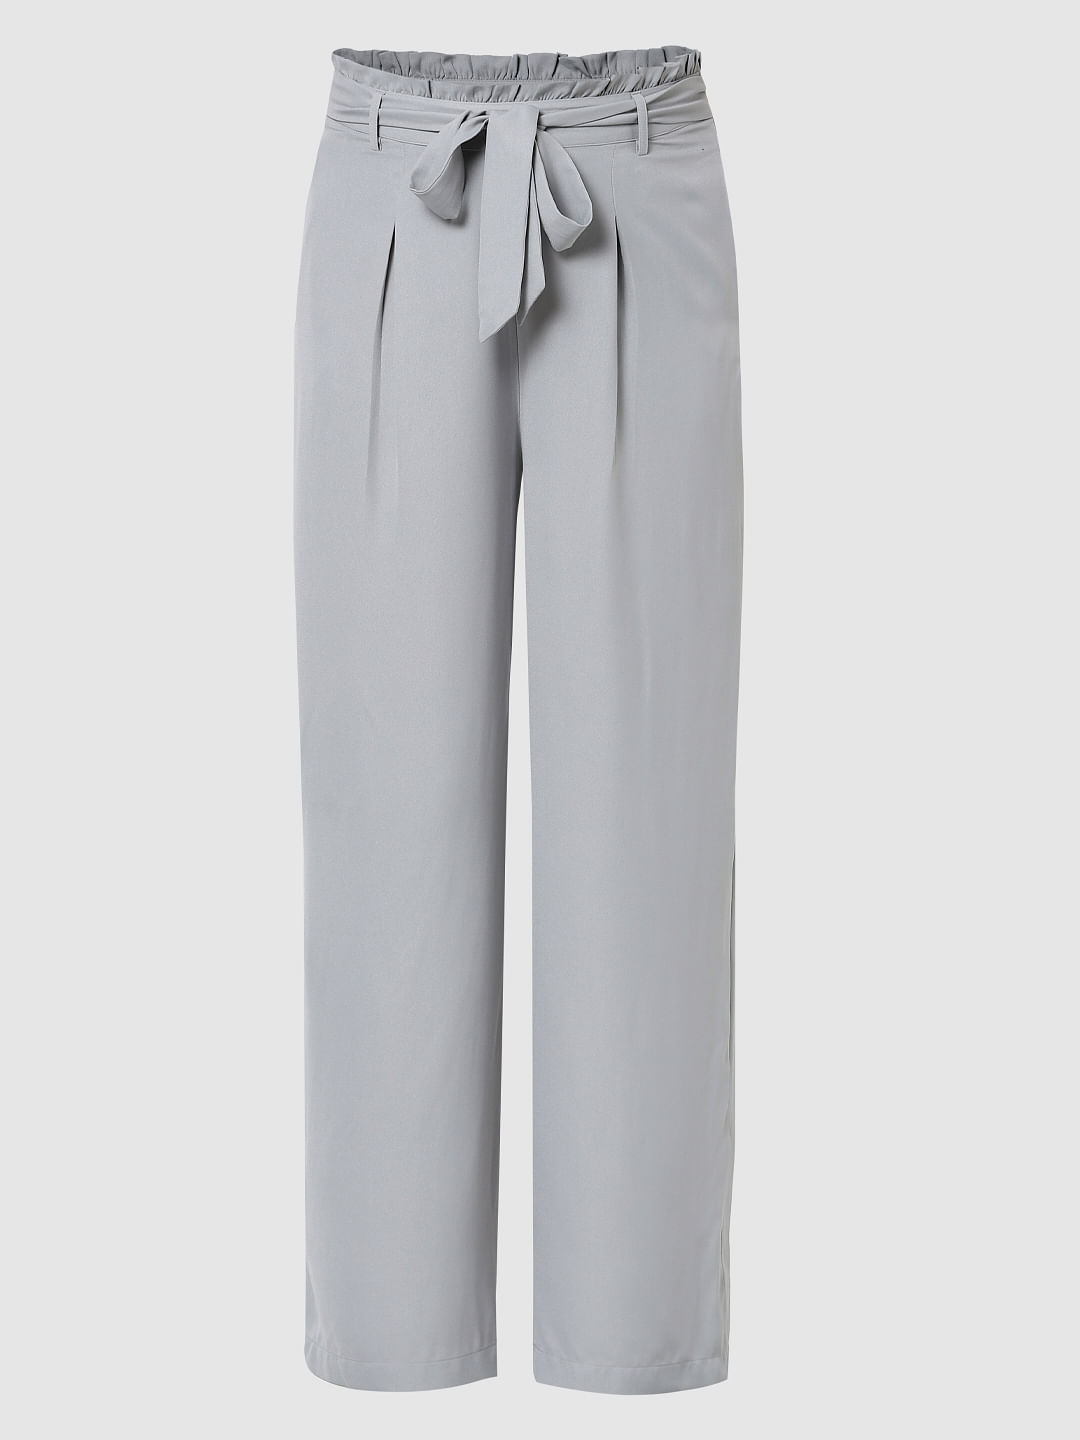 Buy Girls Grey Mid Rise Wide Leg Pants Online at KidsOnly | 299440301